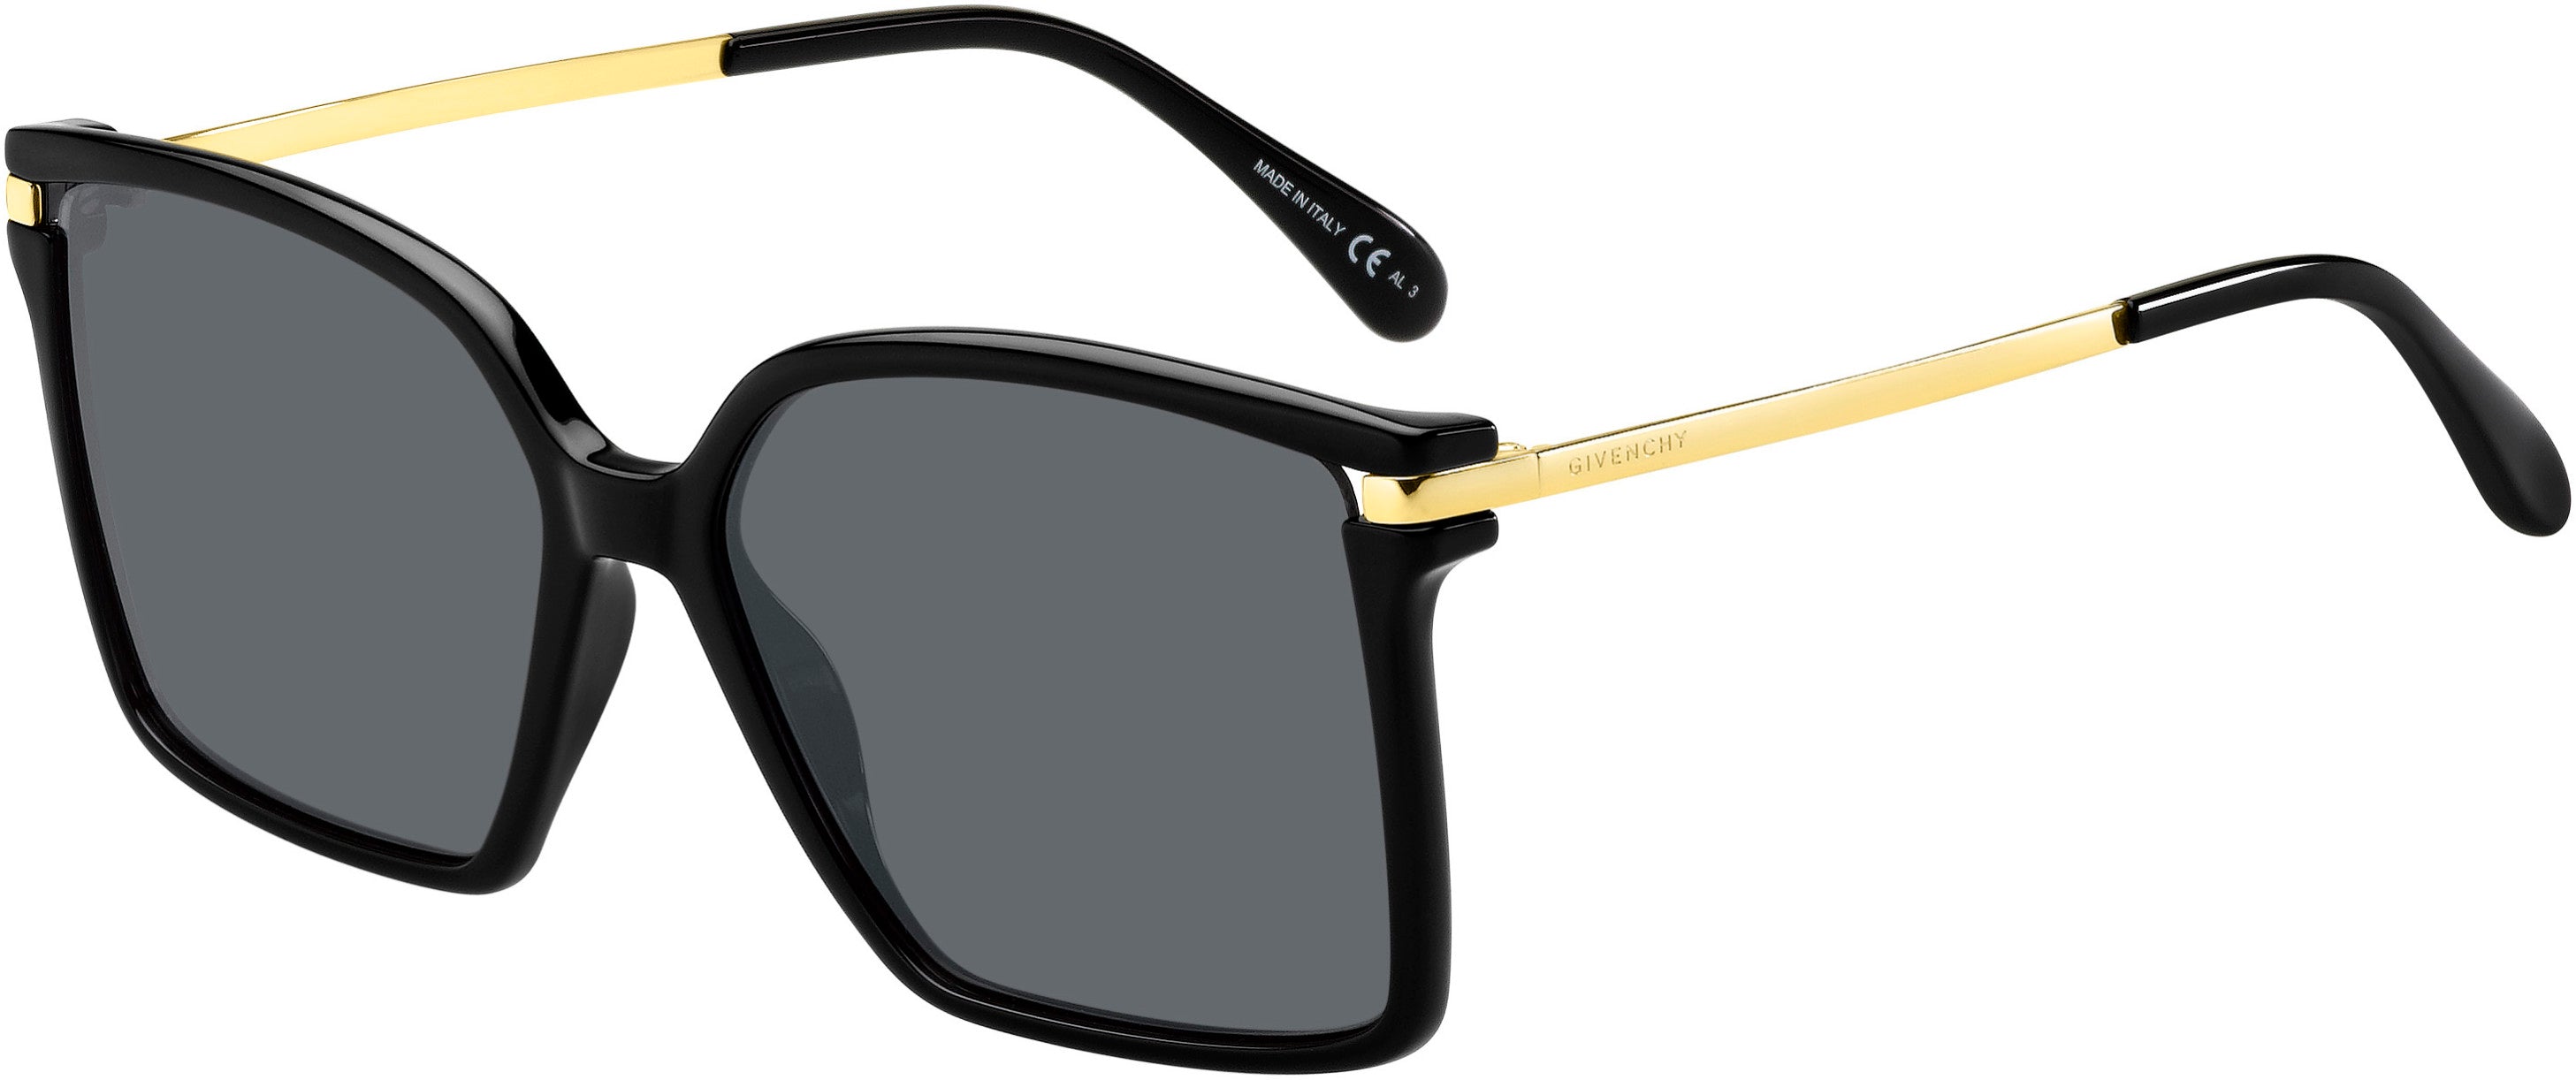  Givenchy 7130/S Rectangular Sunglasses 0807-0807  Black (IR Gray)